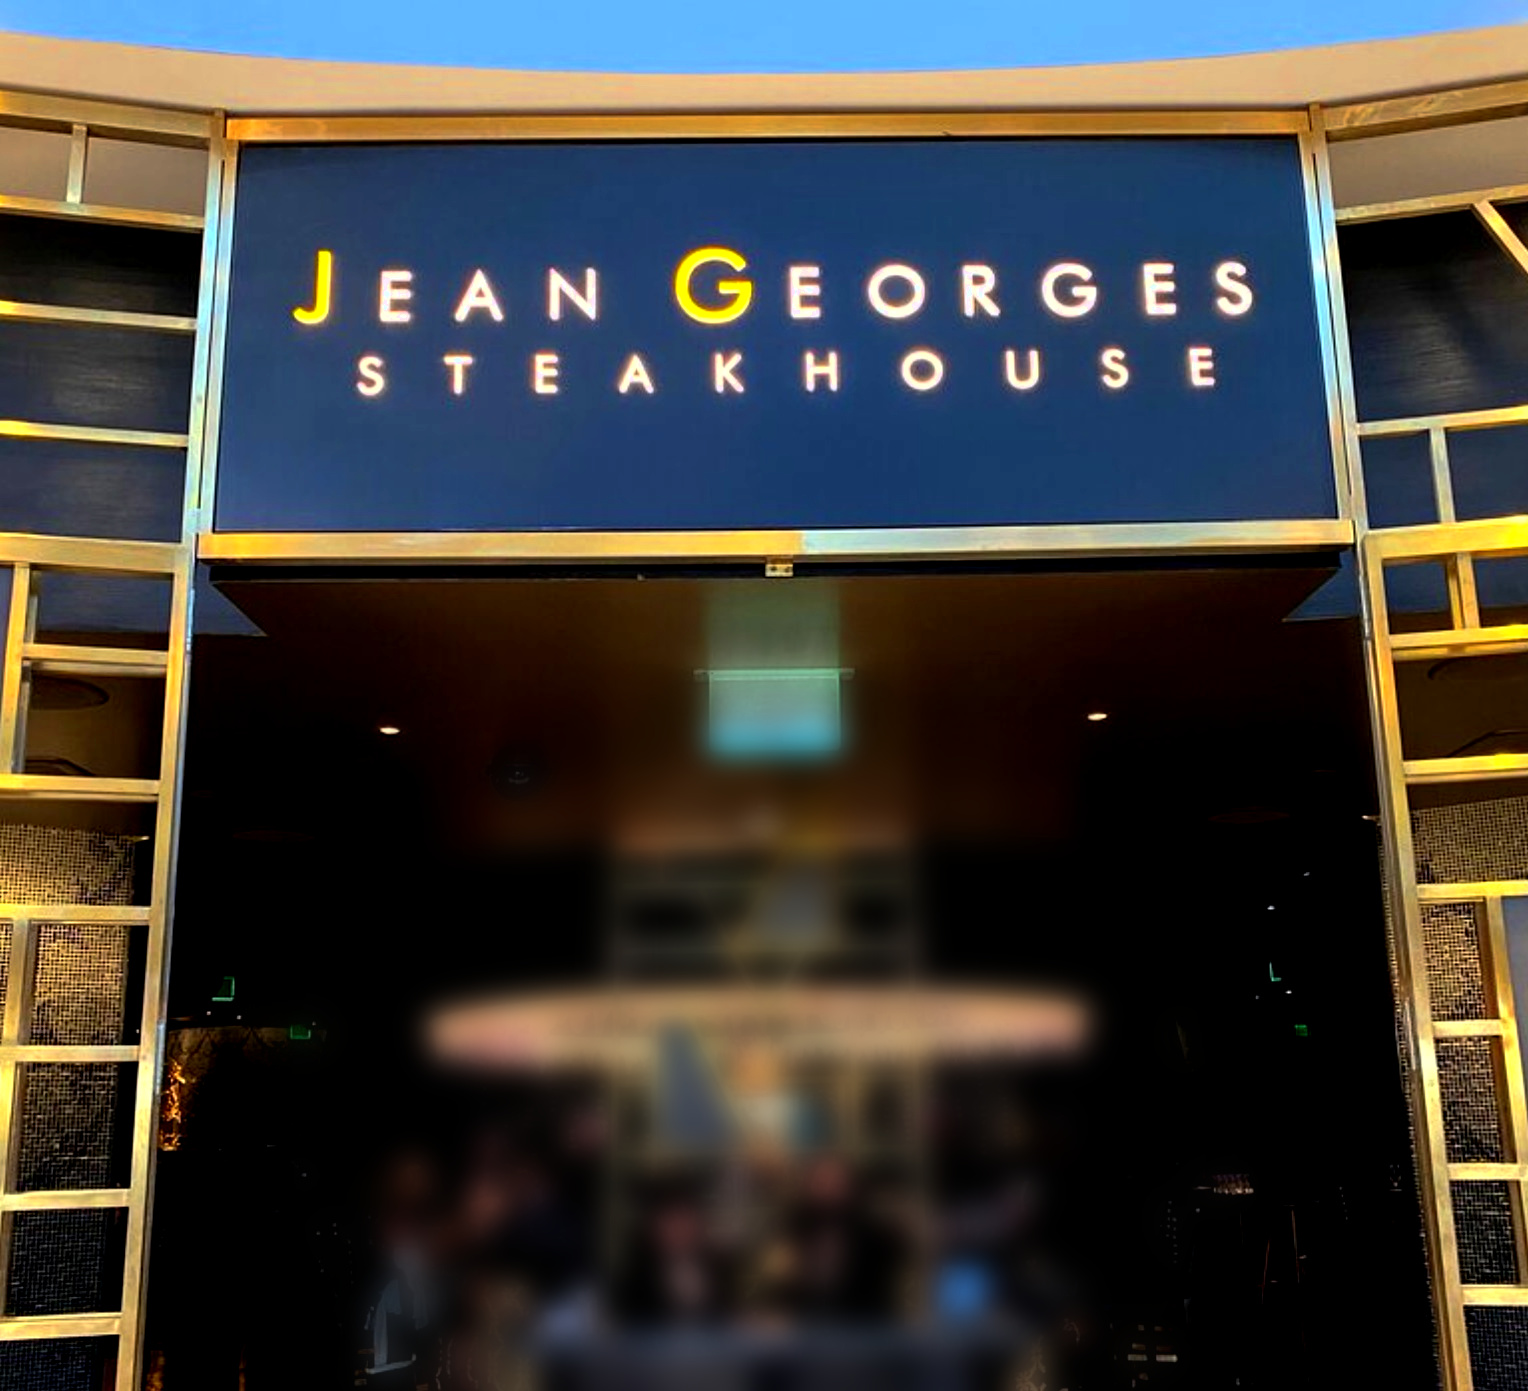 Jean George Steakhouse in Aria Casino in Las Vegas.